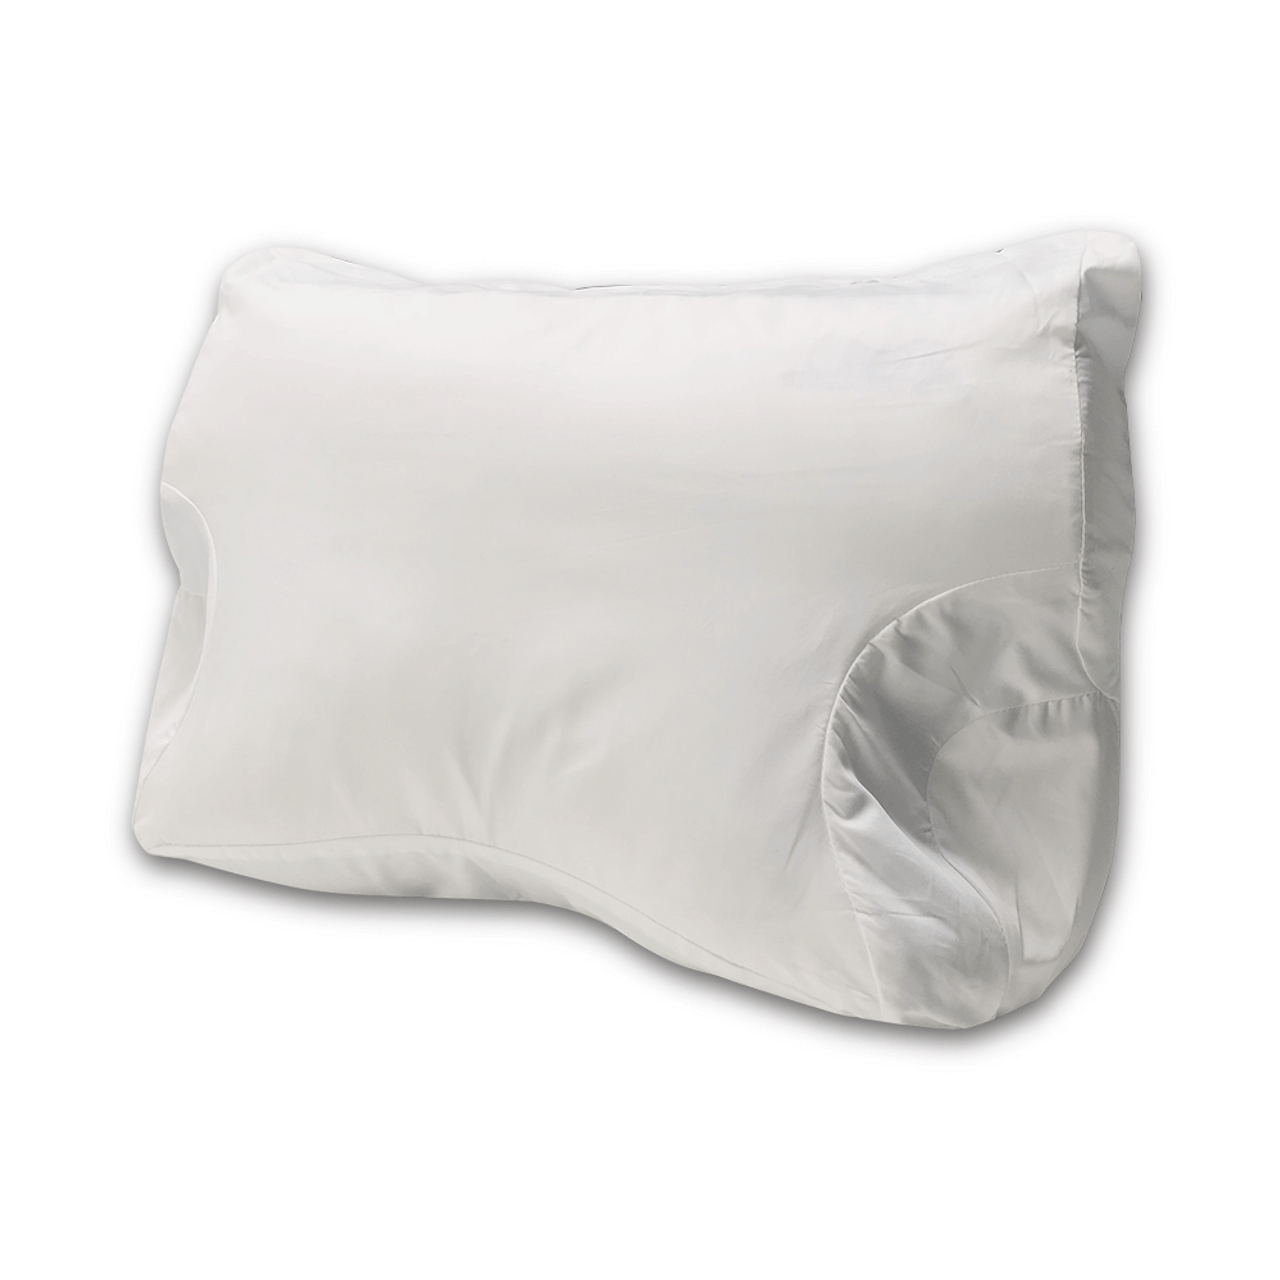 Contour Pillow Cover 